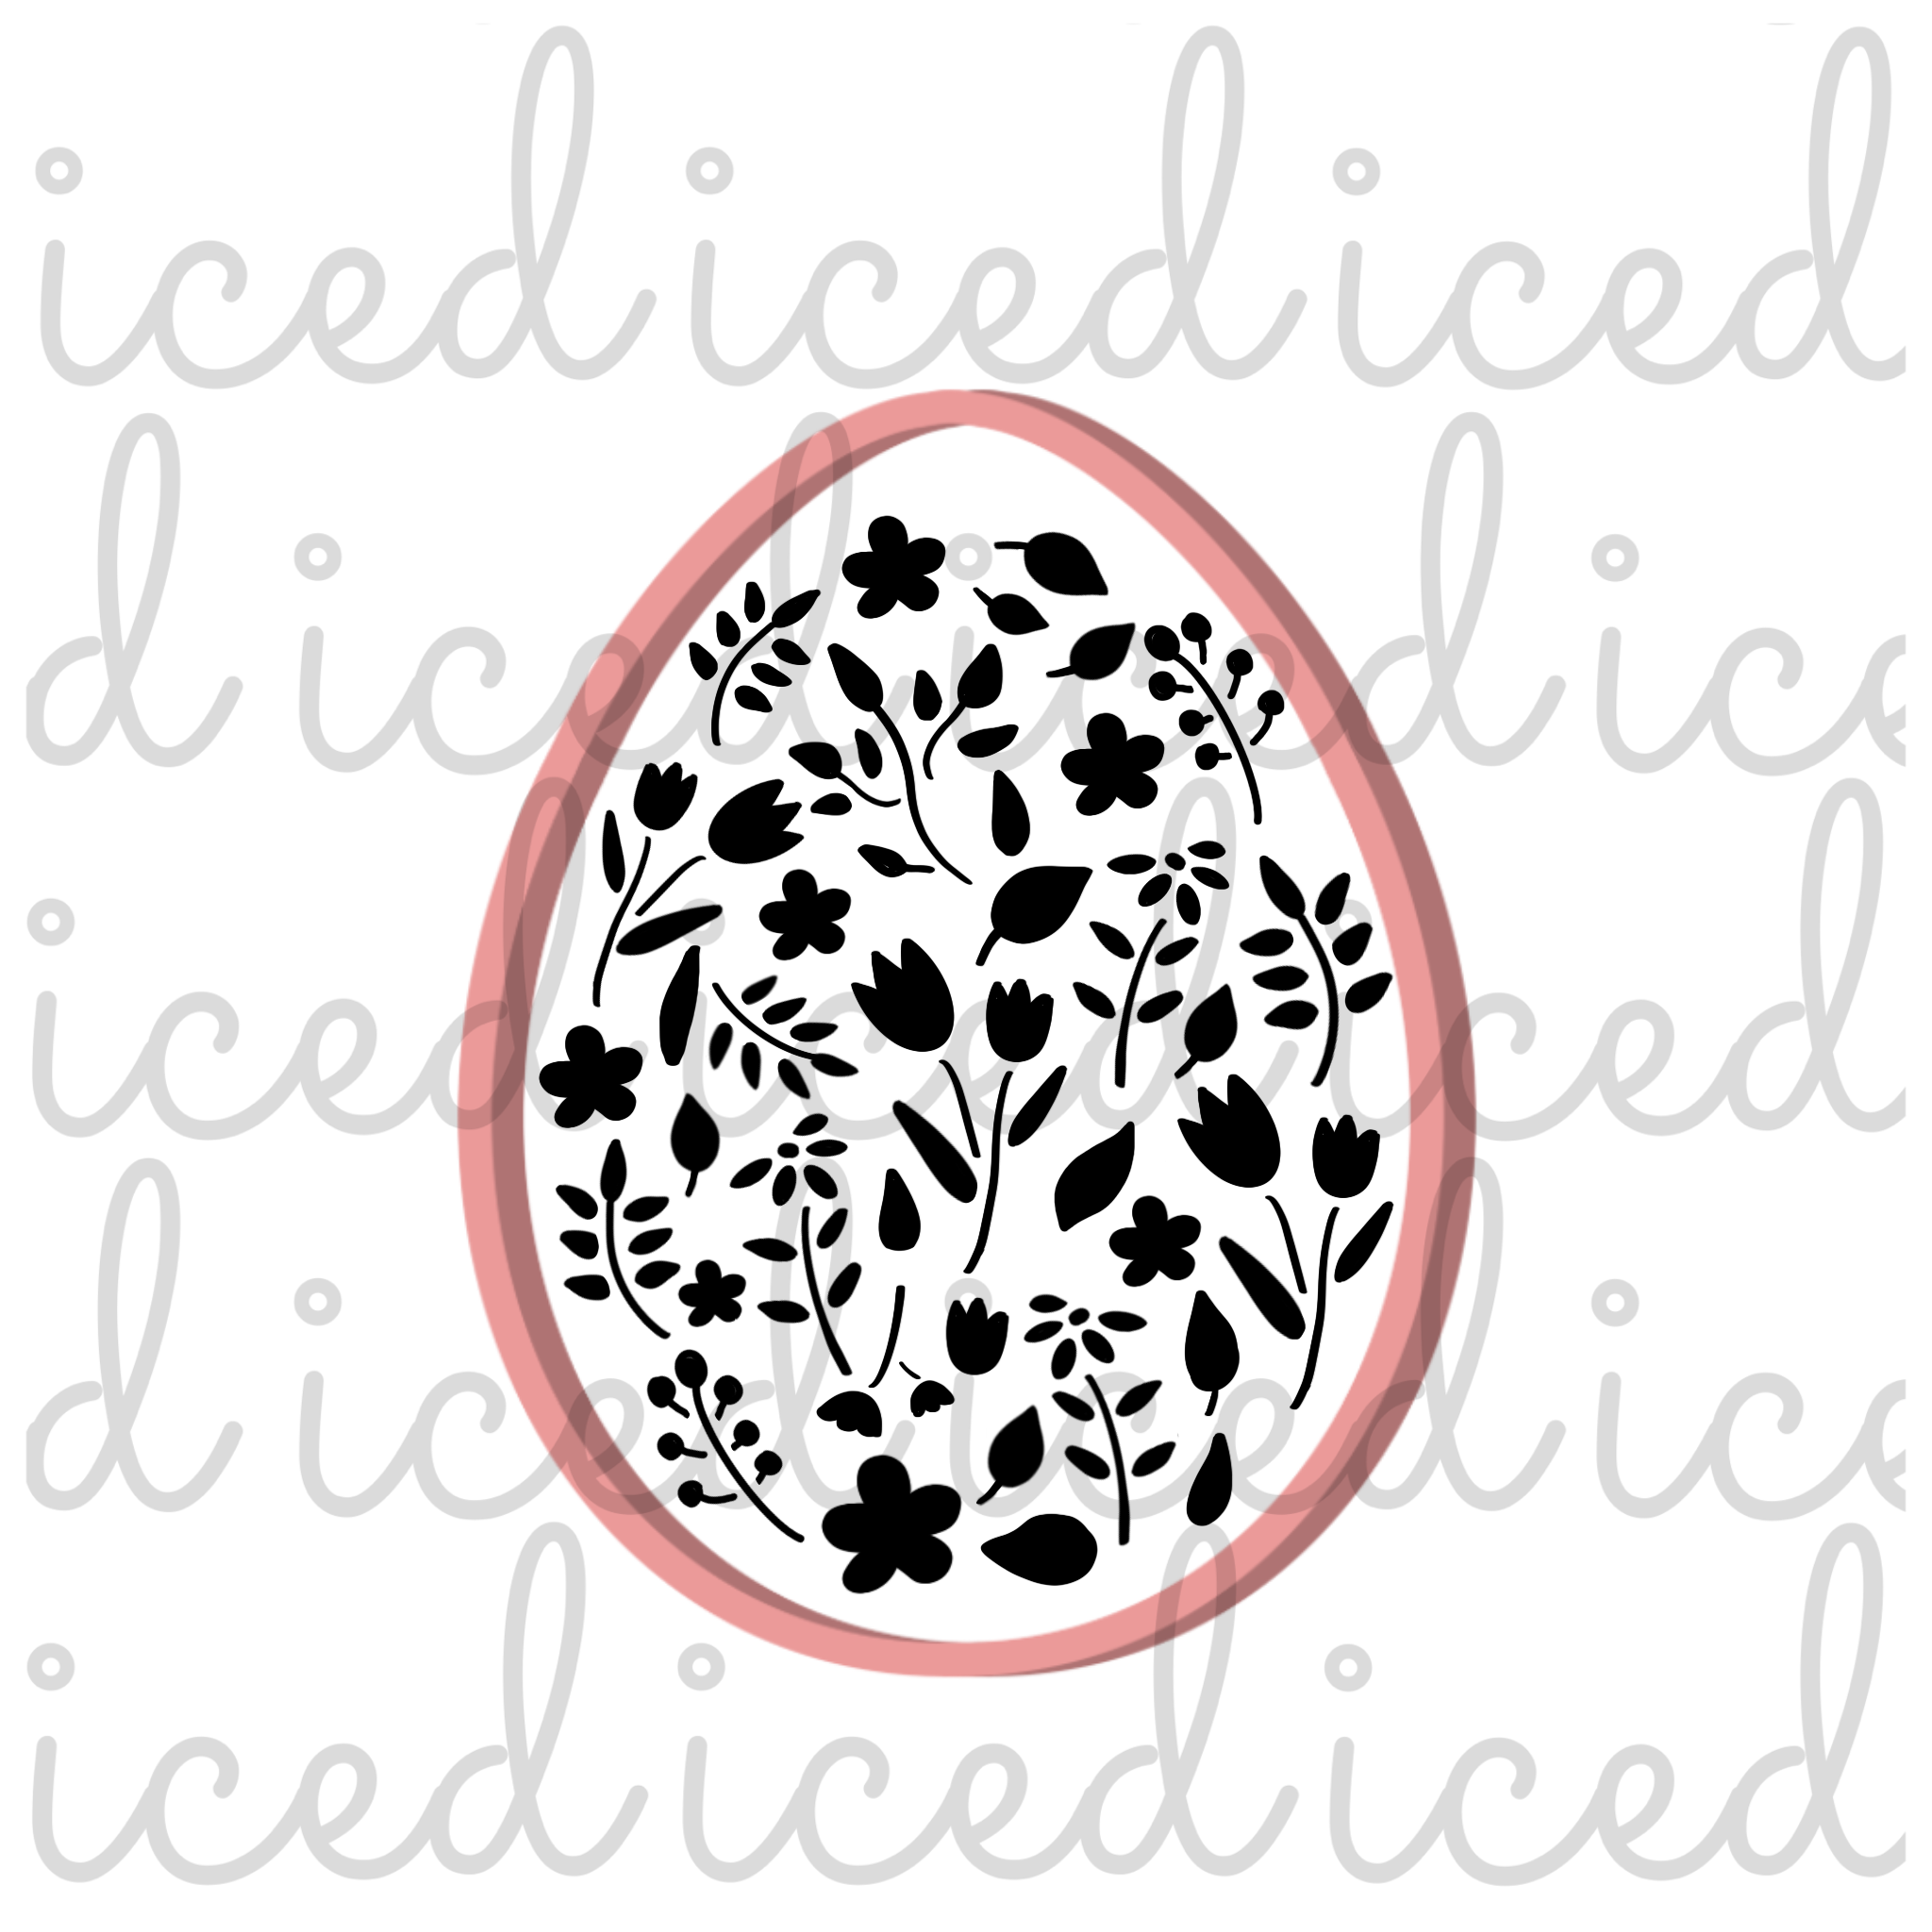 Medium Egg Cutter (Fits Floral Egg Stencil)